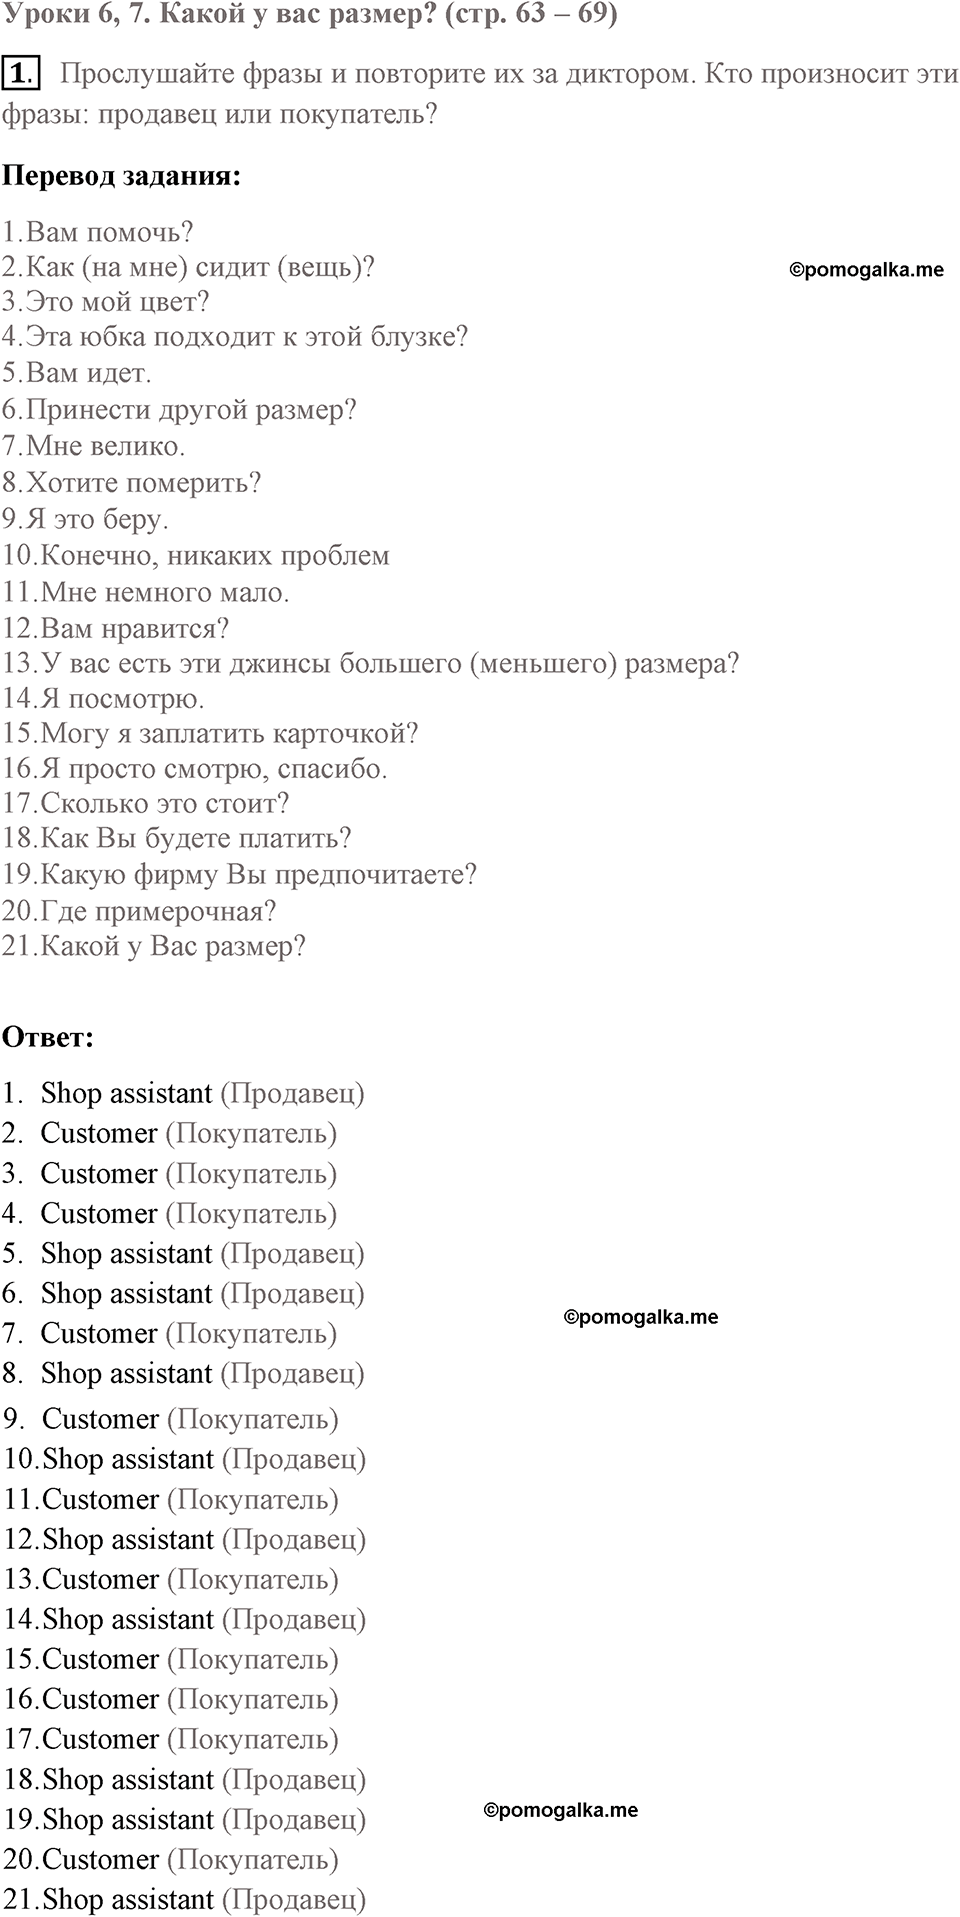 Unit 2 lesson 6-7 exercise №1 английский язык 9 класс Happy English.ru